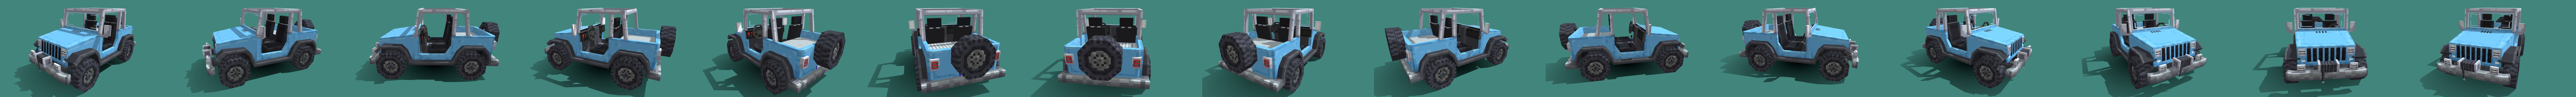 Jeep Minecraft Skins